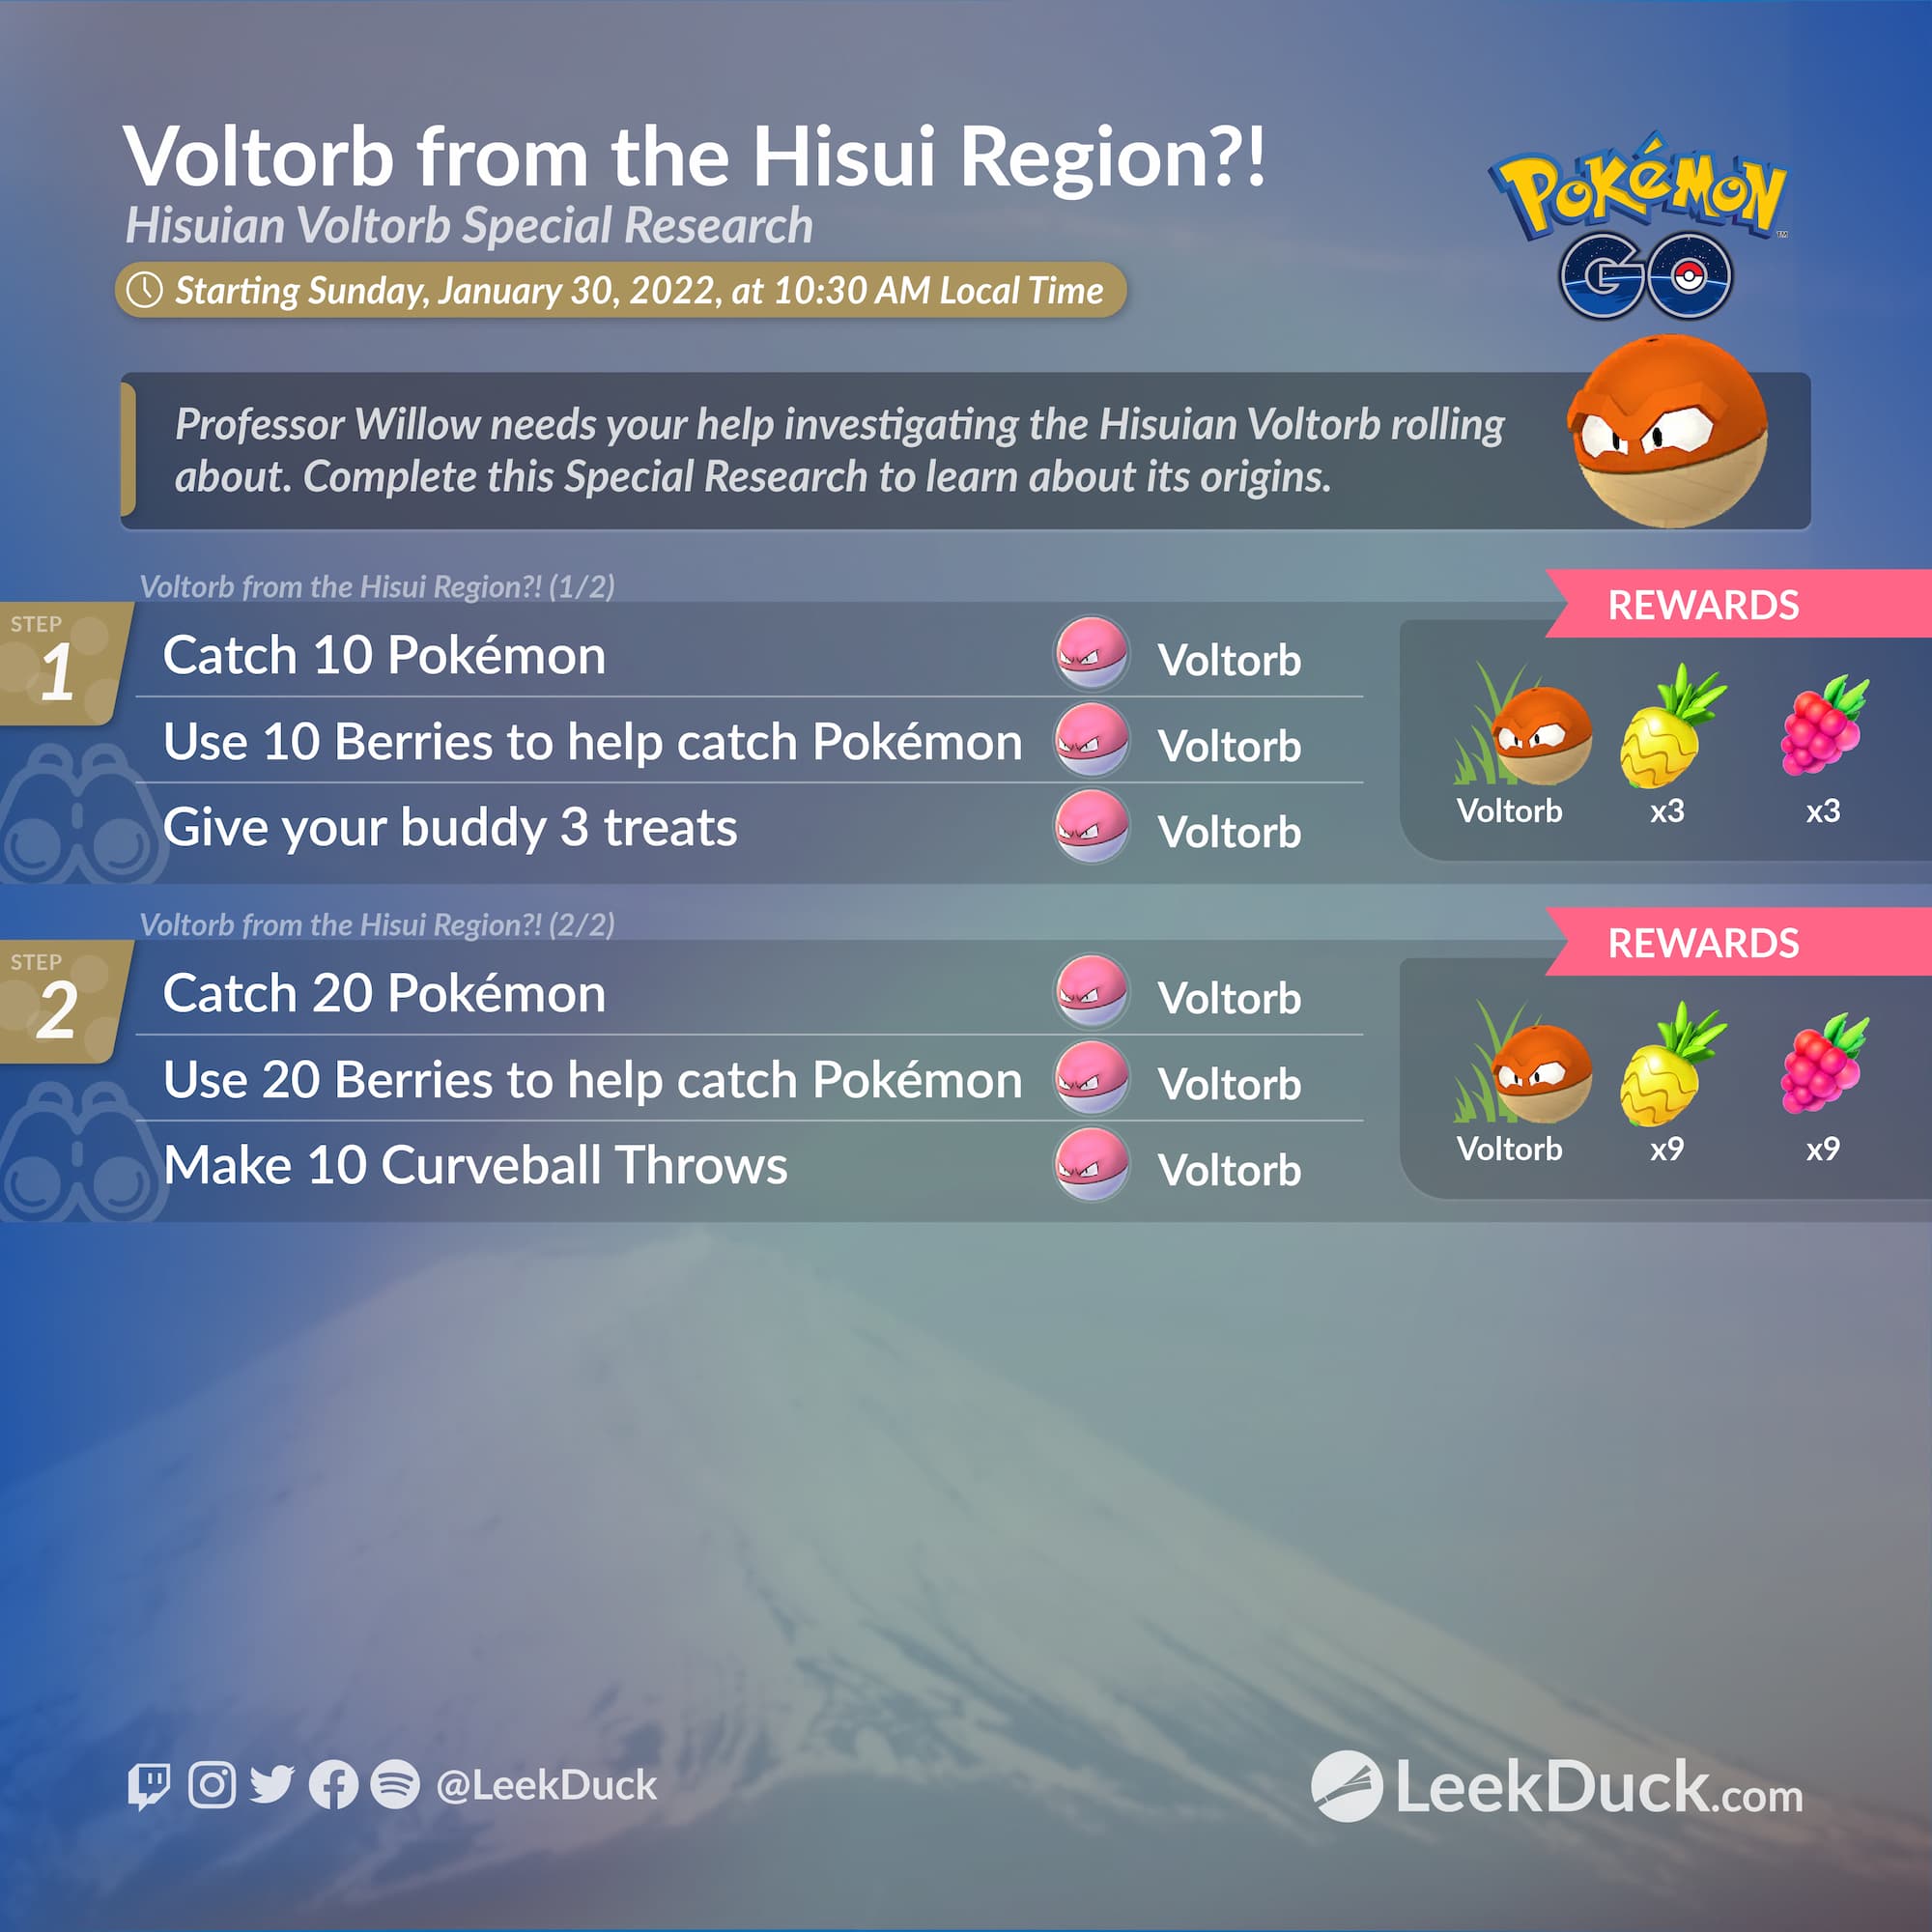 Pokemon Go: How to Get Shiny Voltorb